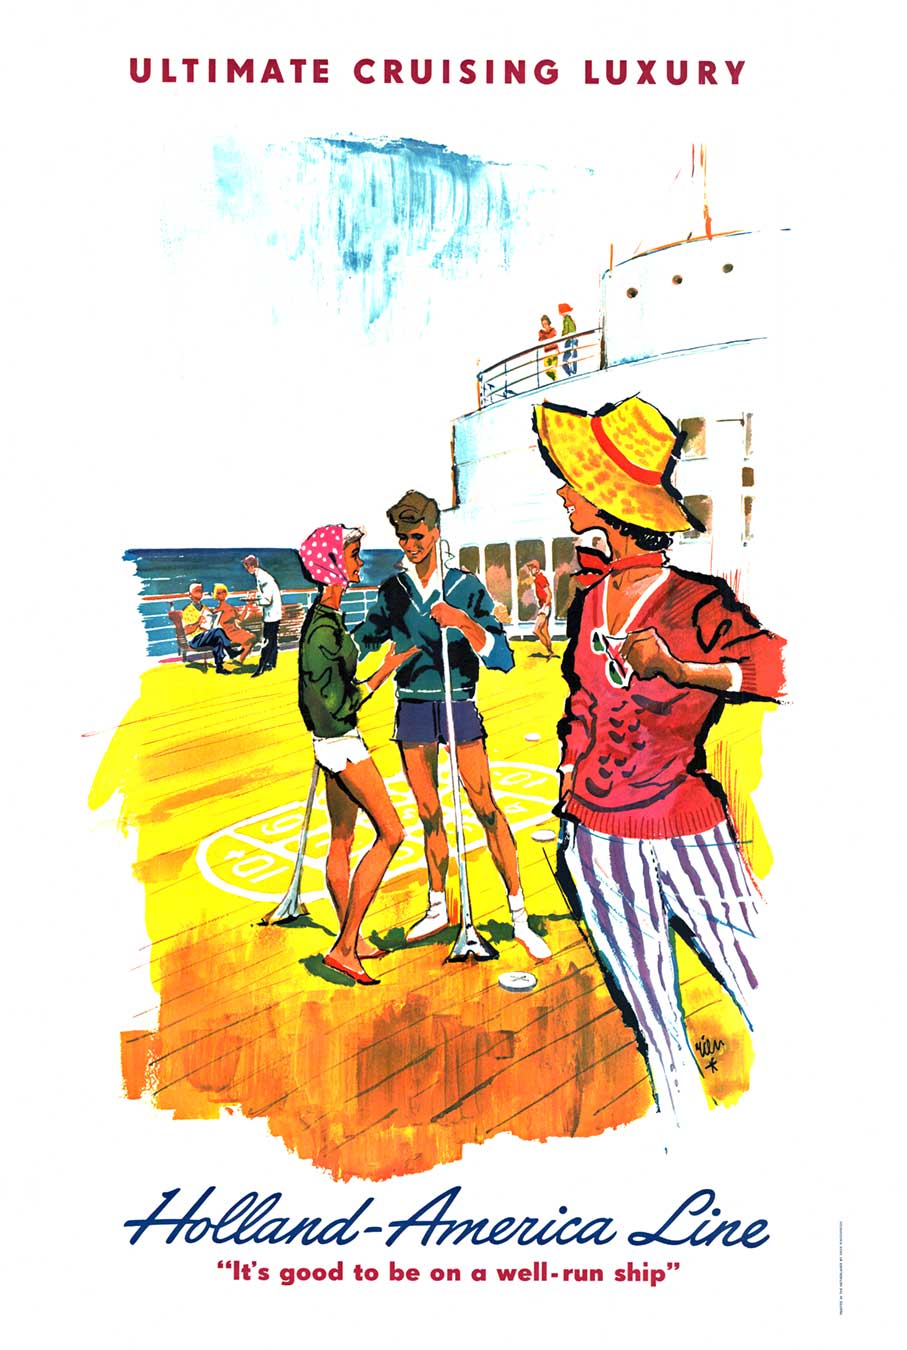 travel poster, cruise line shuffle board, deck, original poster, people, summertime, ocean, luxury, vintage travel poster